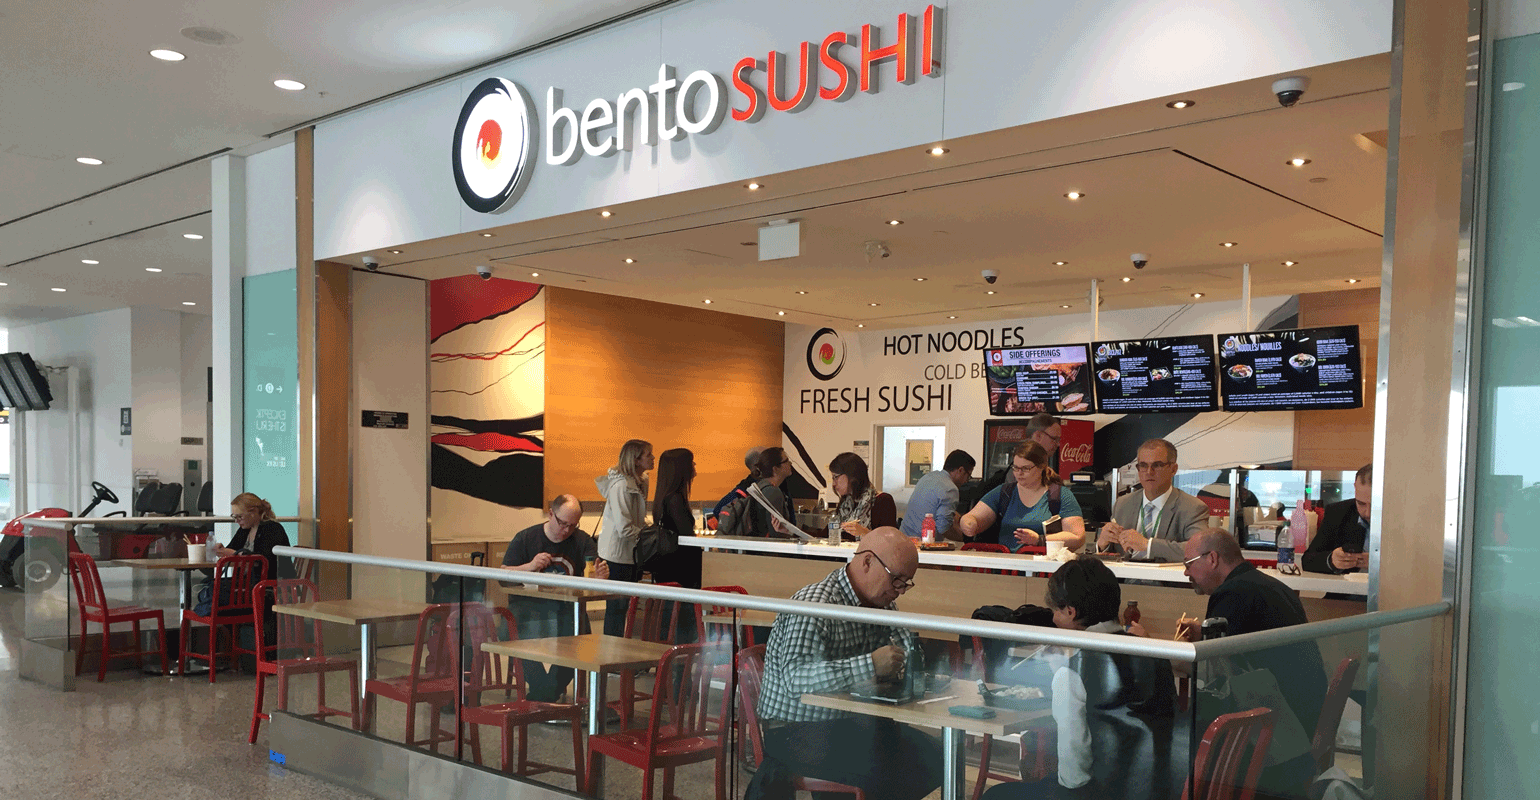 Yo! Sushi buys Bento Sushi for 78M Nation's Restaurant News